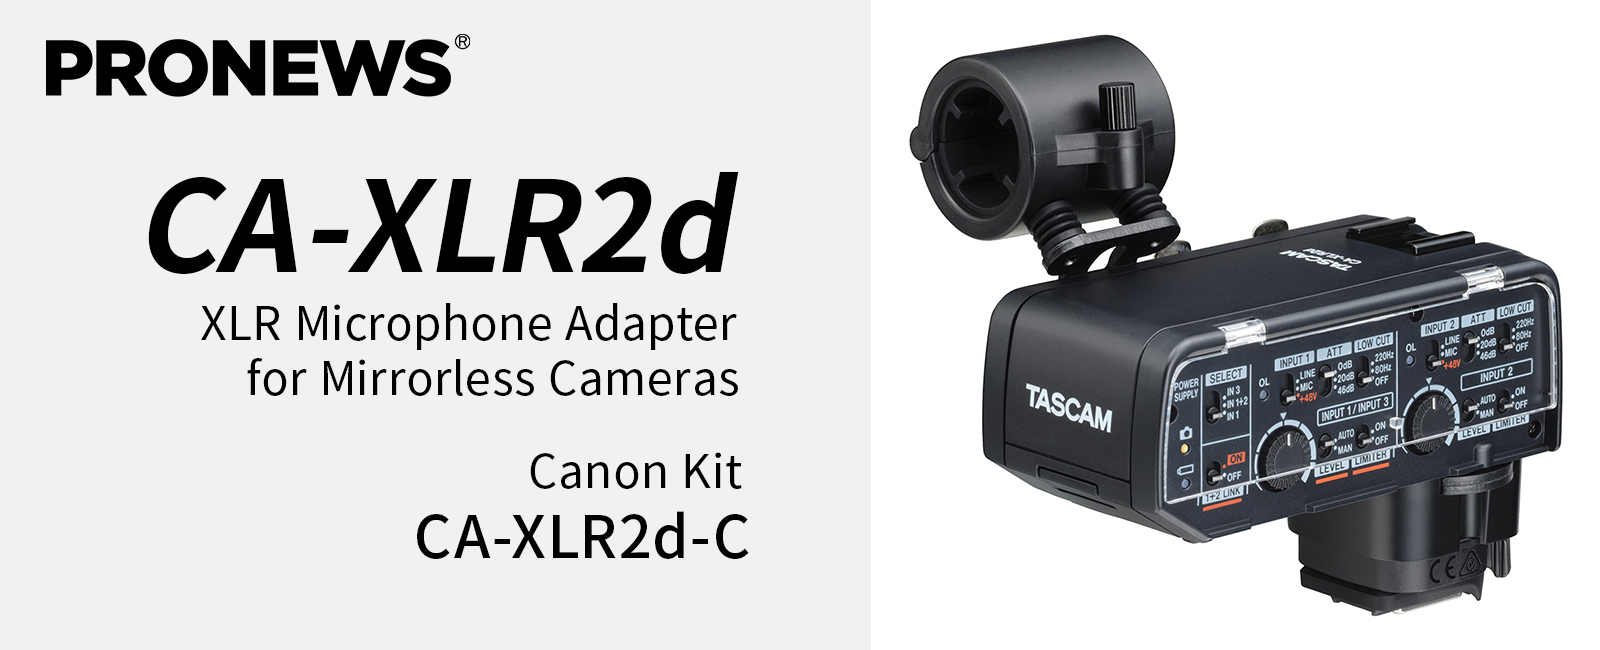 「CA-XLR2d」動画レビュー！カメラマンが語るミラーレスカメラ対応のXLRマイクアダプターを使う意義とは